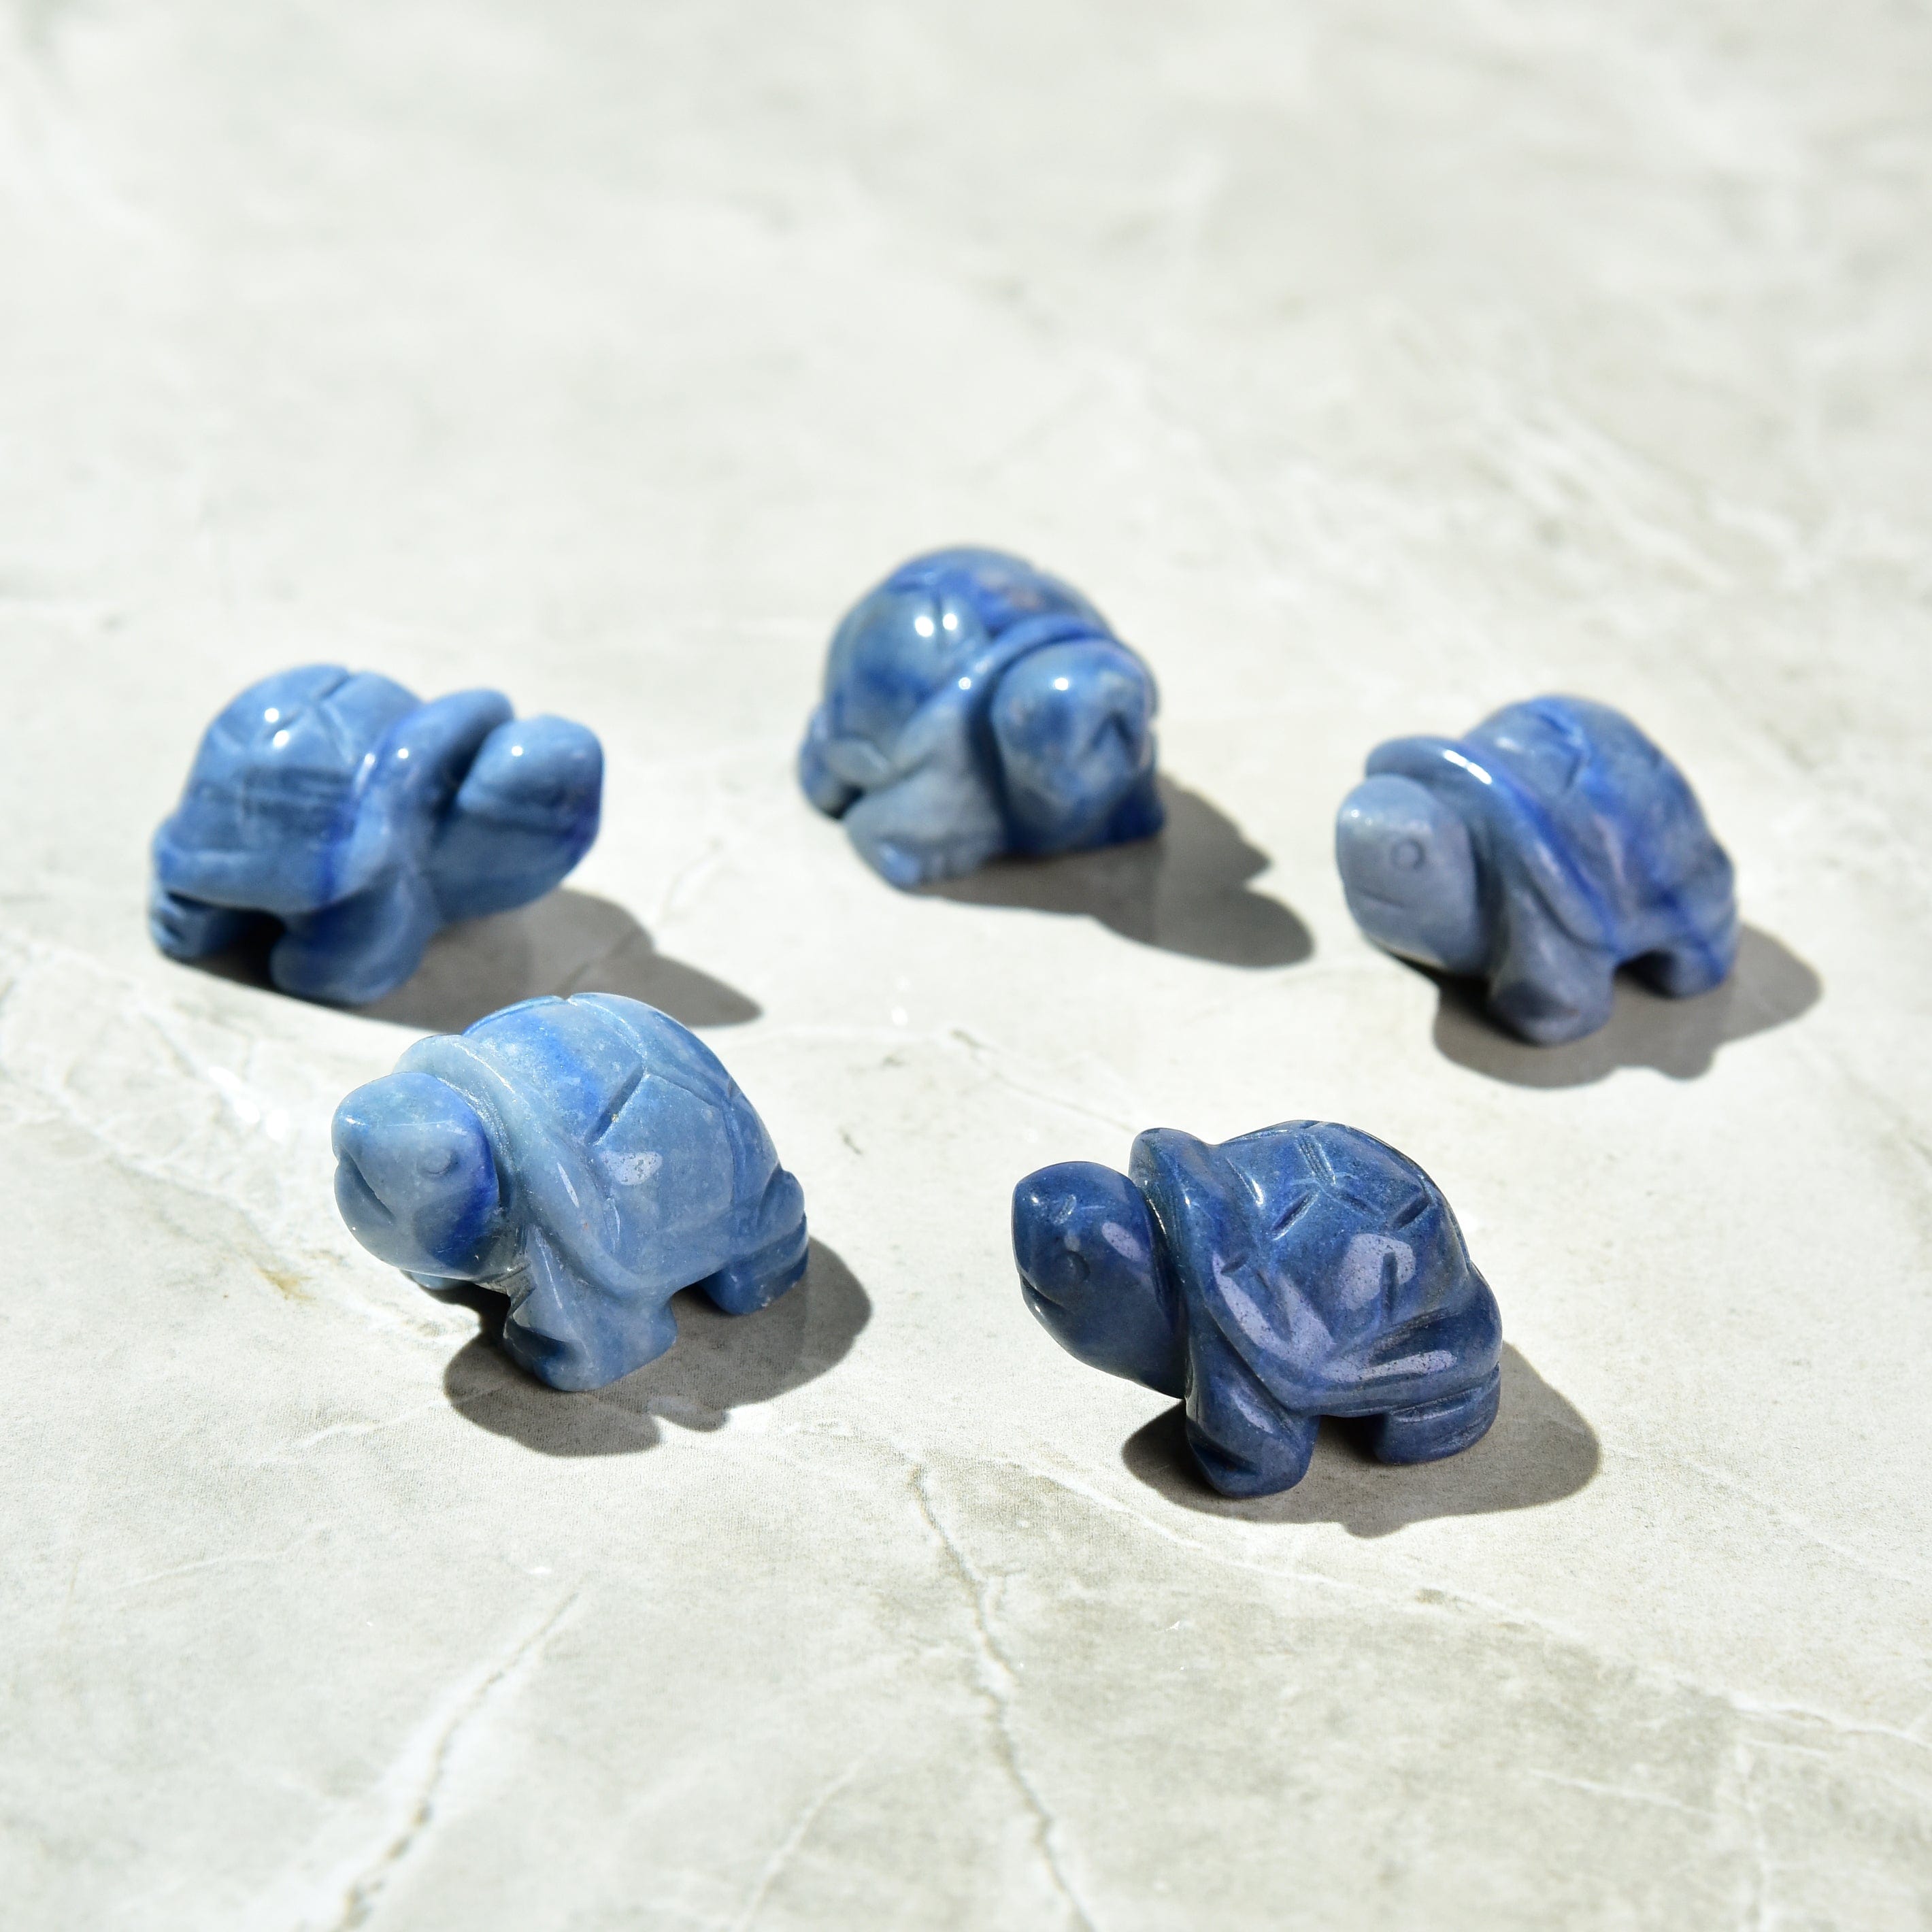 Kalifano Gemstone Carvings Blue Aventurine Turtle 1.5" Gemstone Carving CV13-T-BA